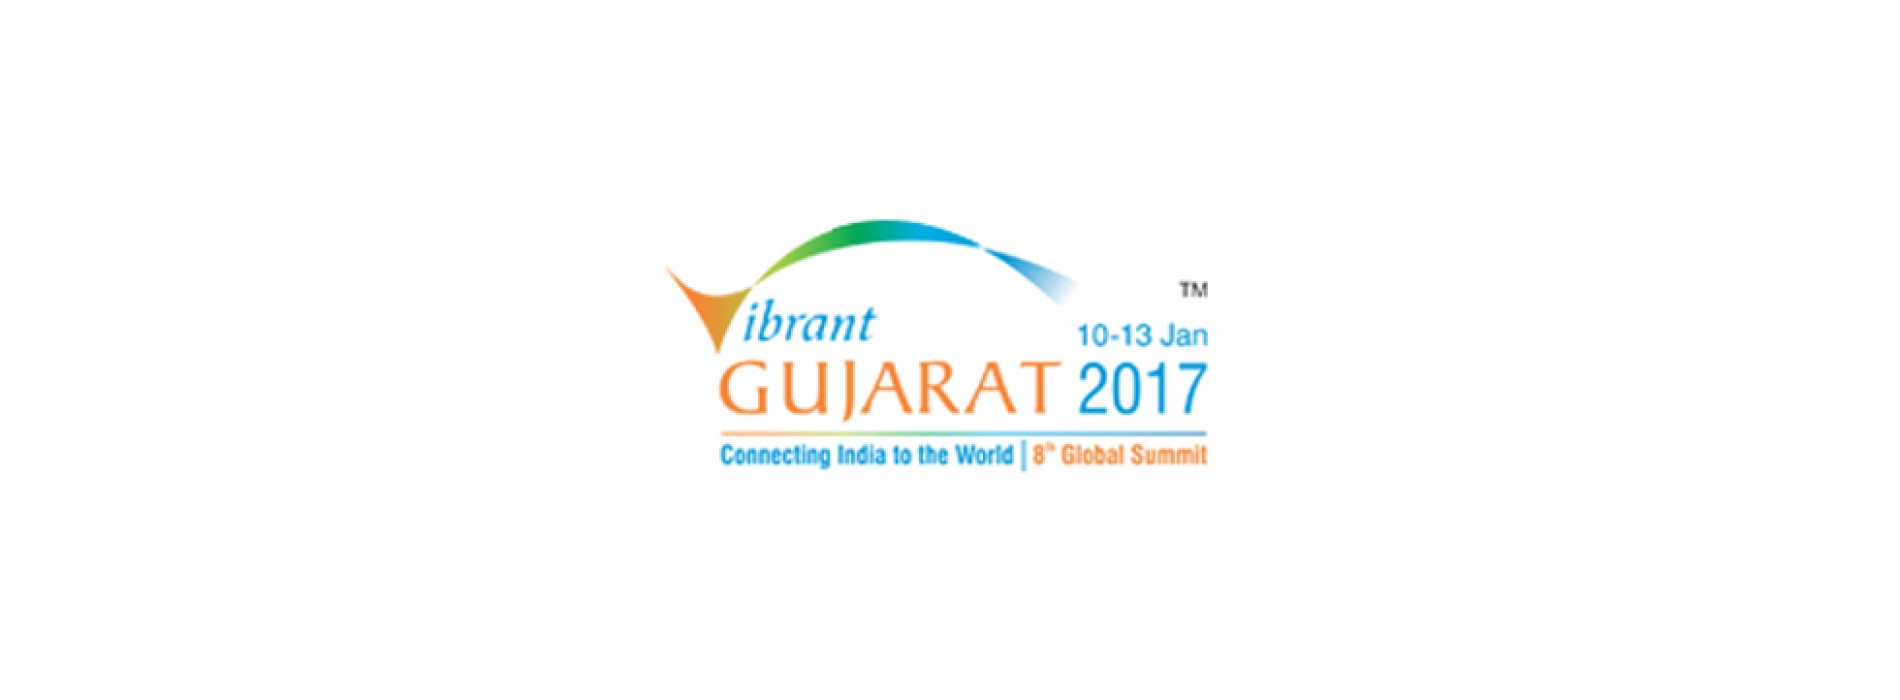 Vibrant Gujarat attendees to enjoy 5%-10% off on airfares